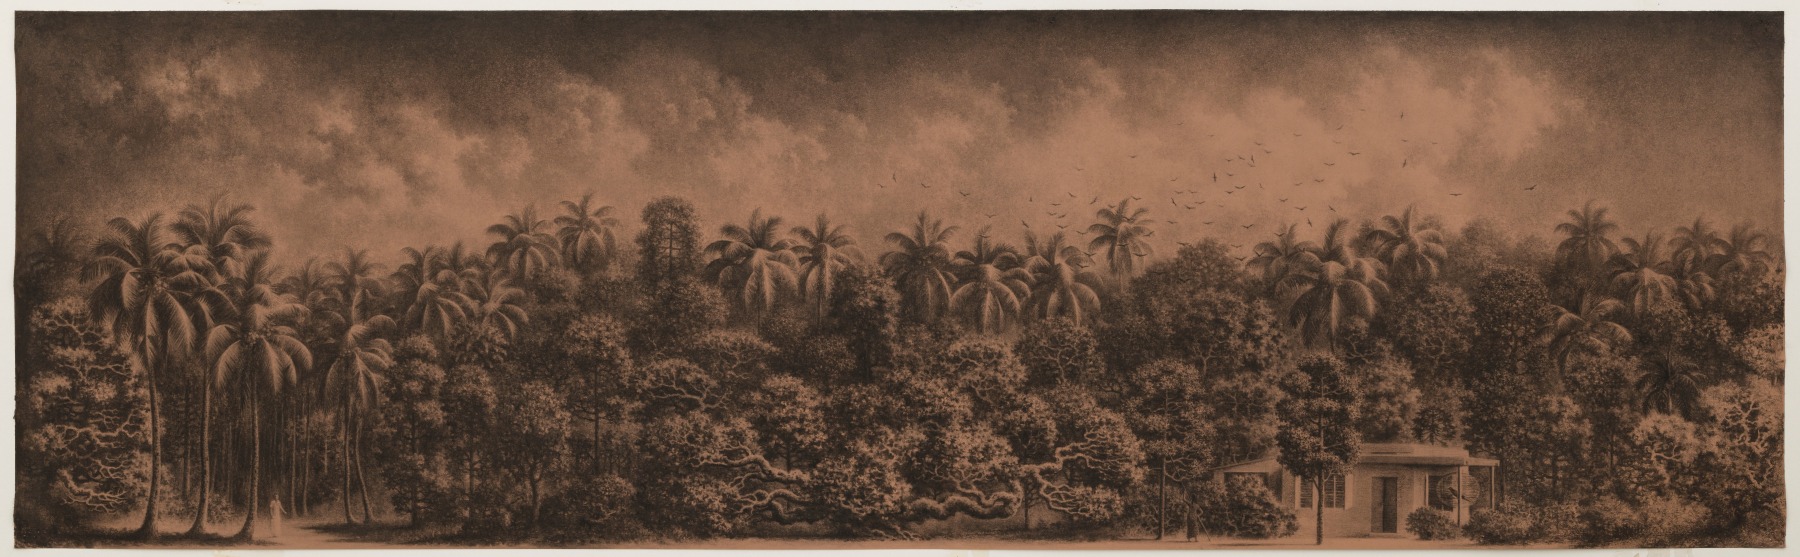 AJI V.N.

Untitled, 2014

Charcoal on coloured paper

29.5 x 98.4 in /&amp;nbsp;75 x 250 cm